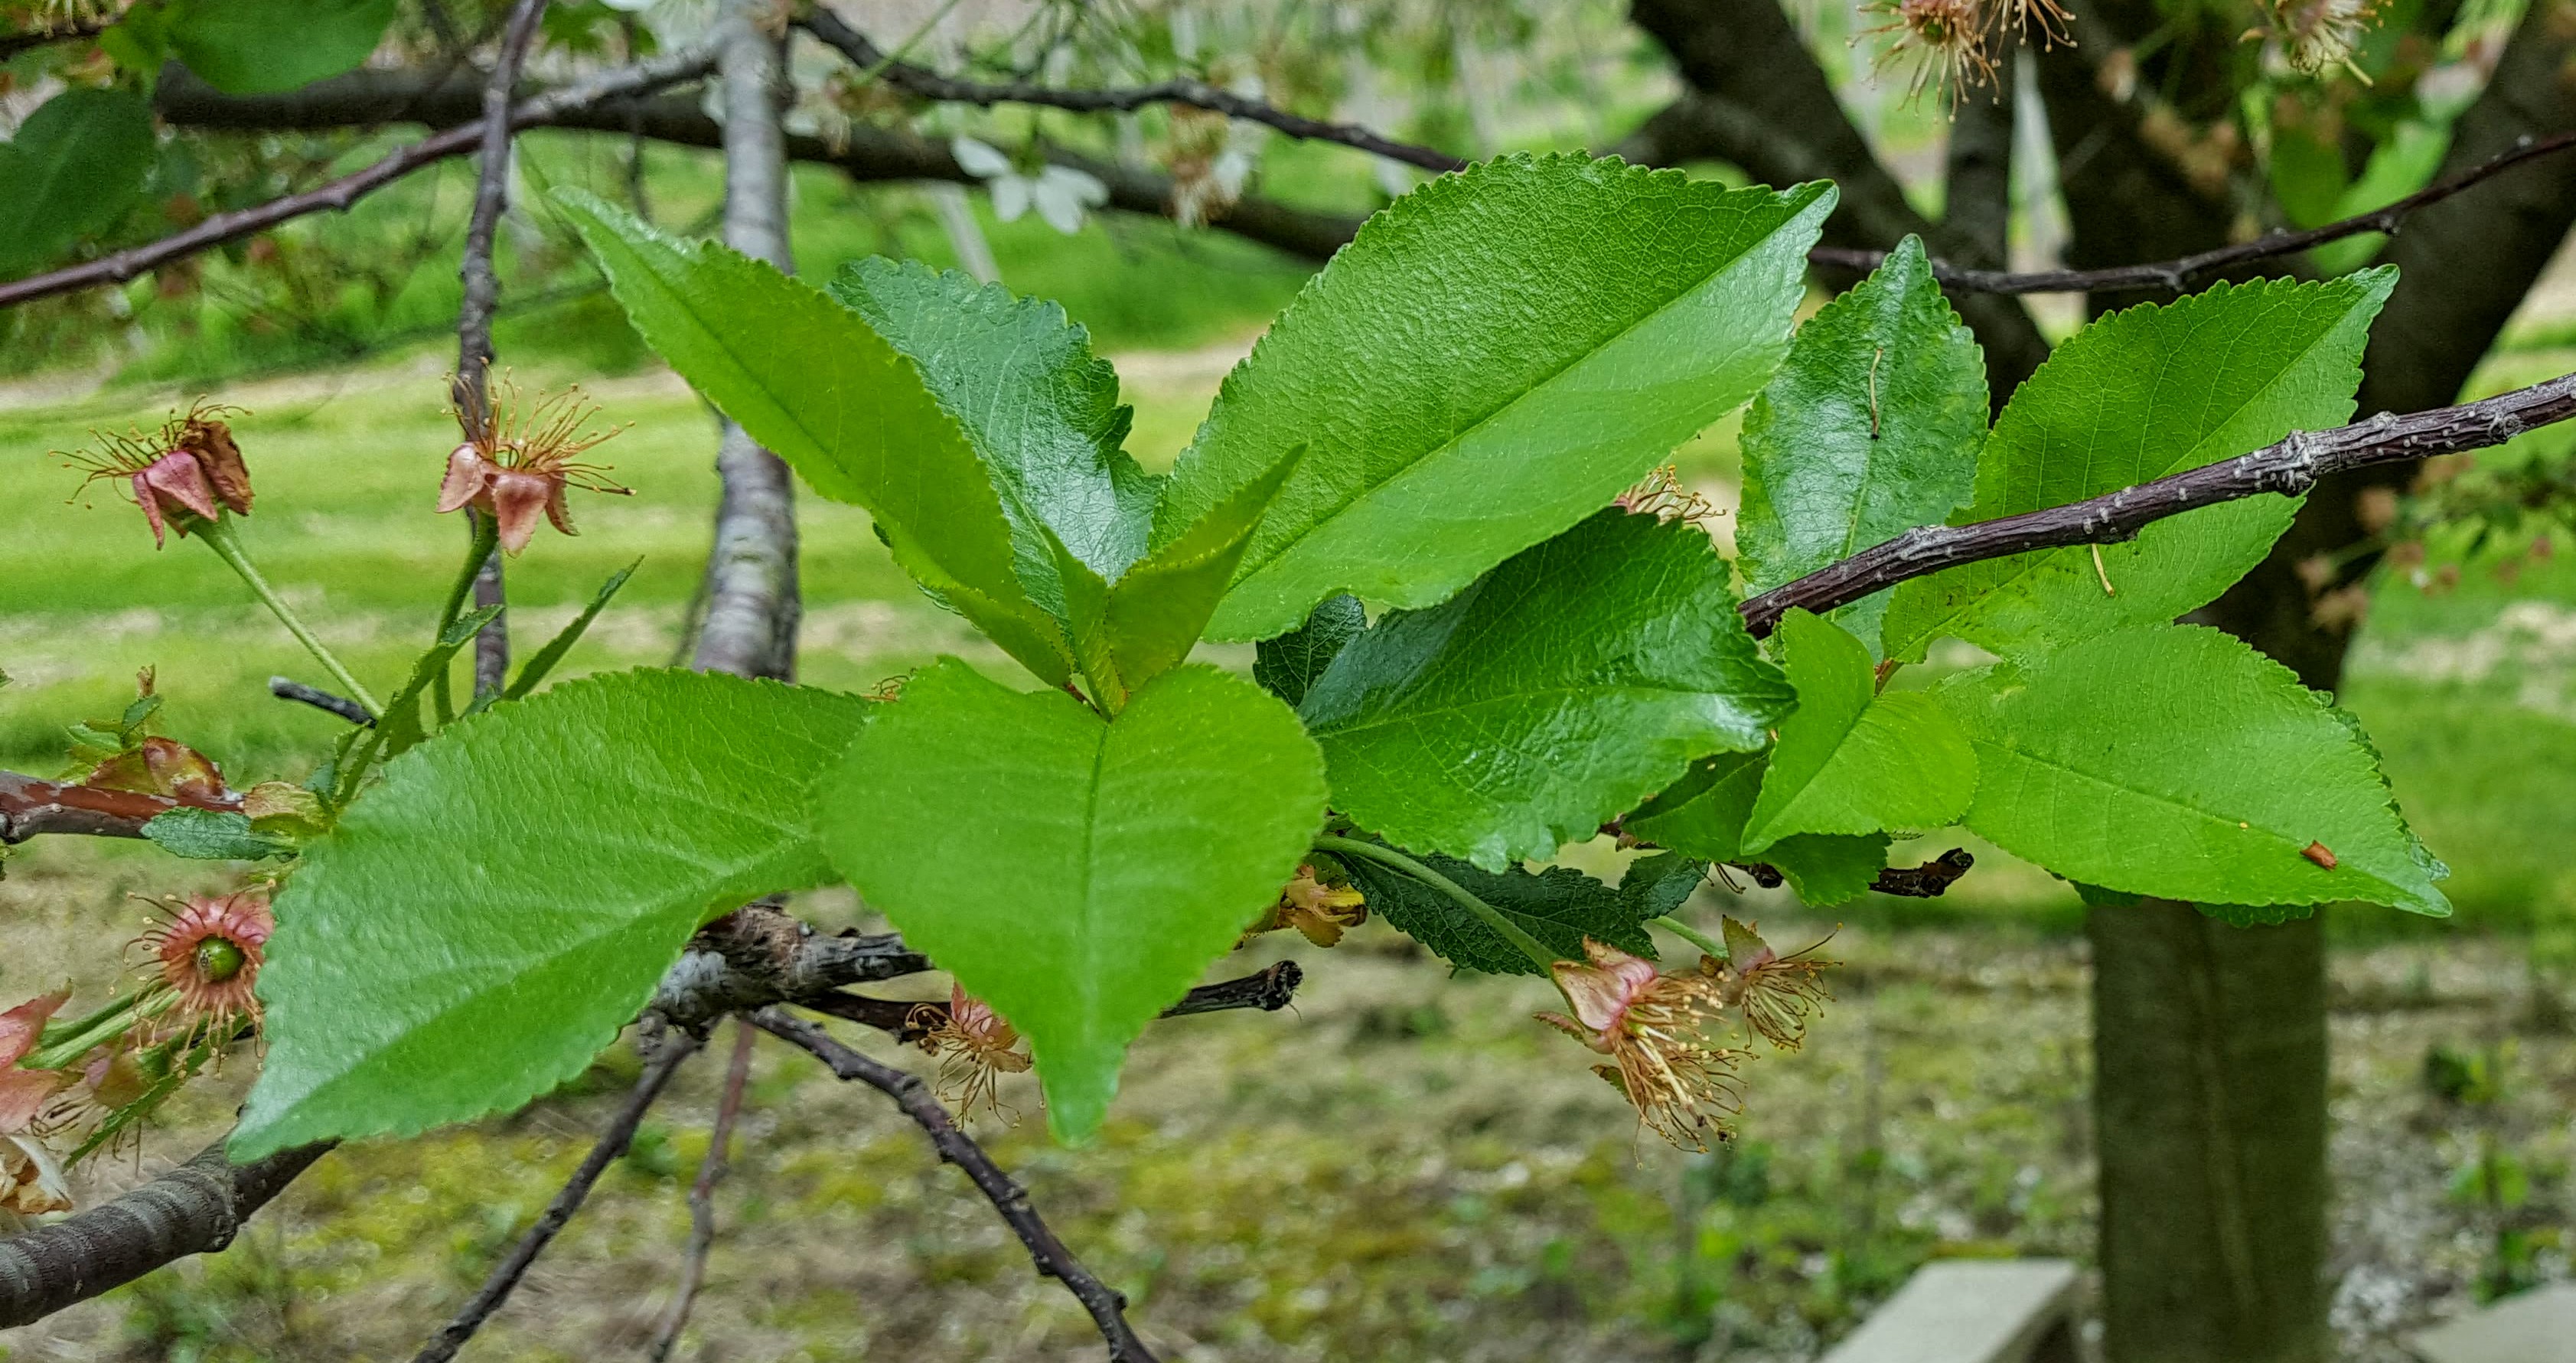 Cherry leaves